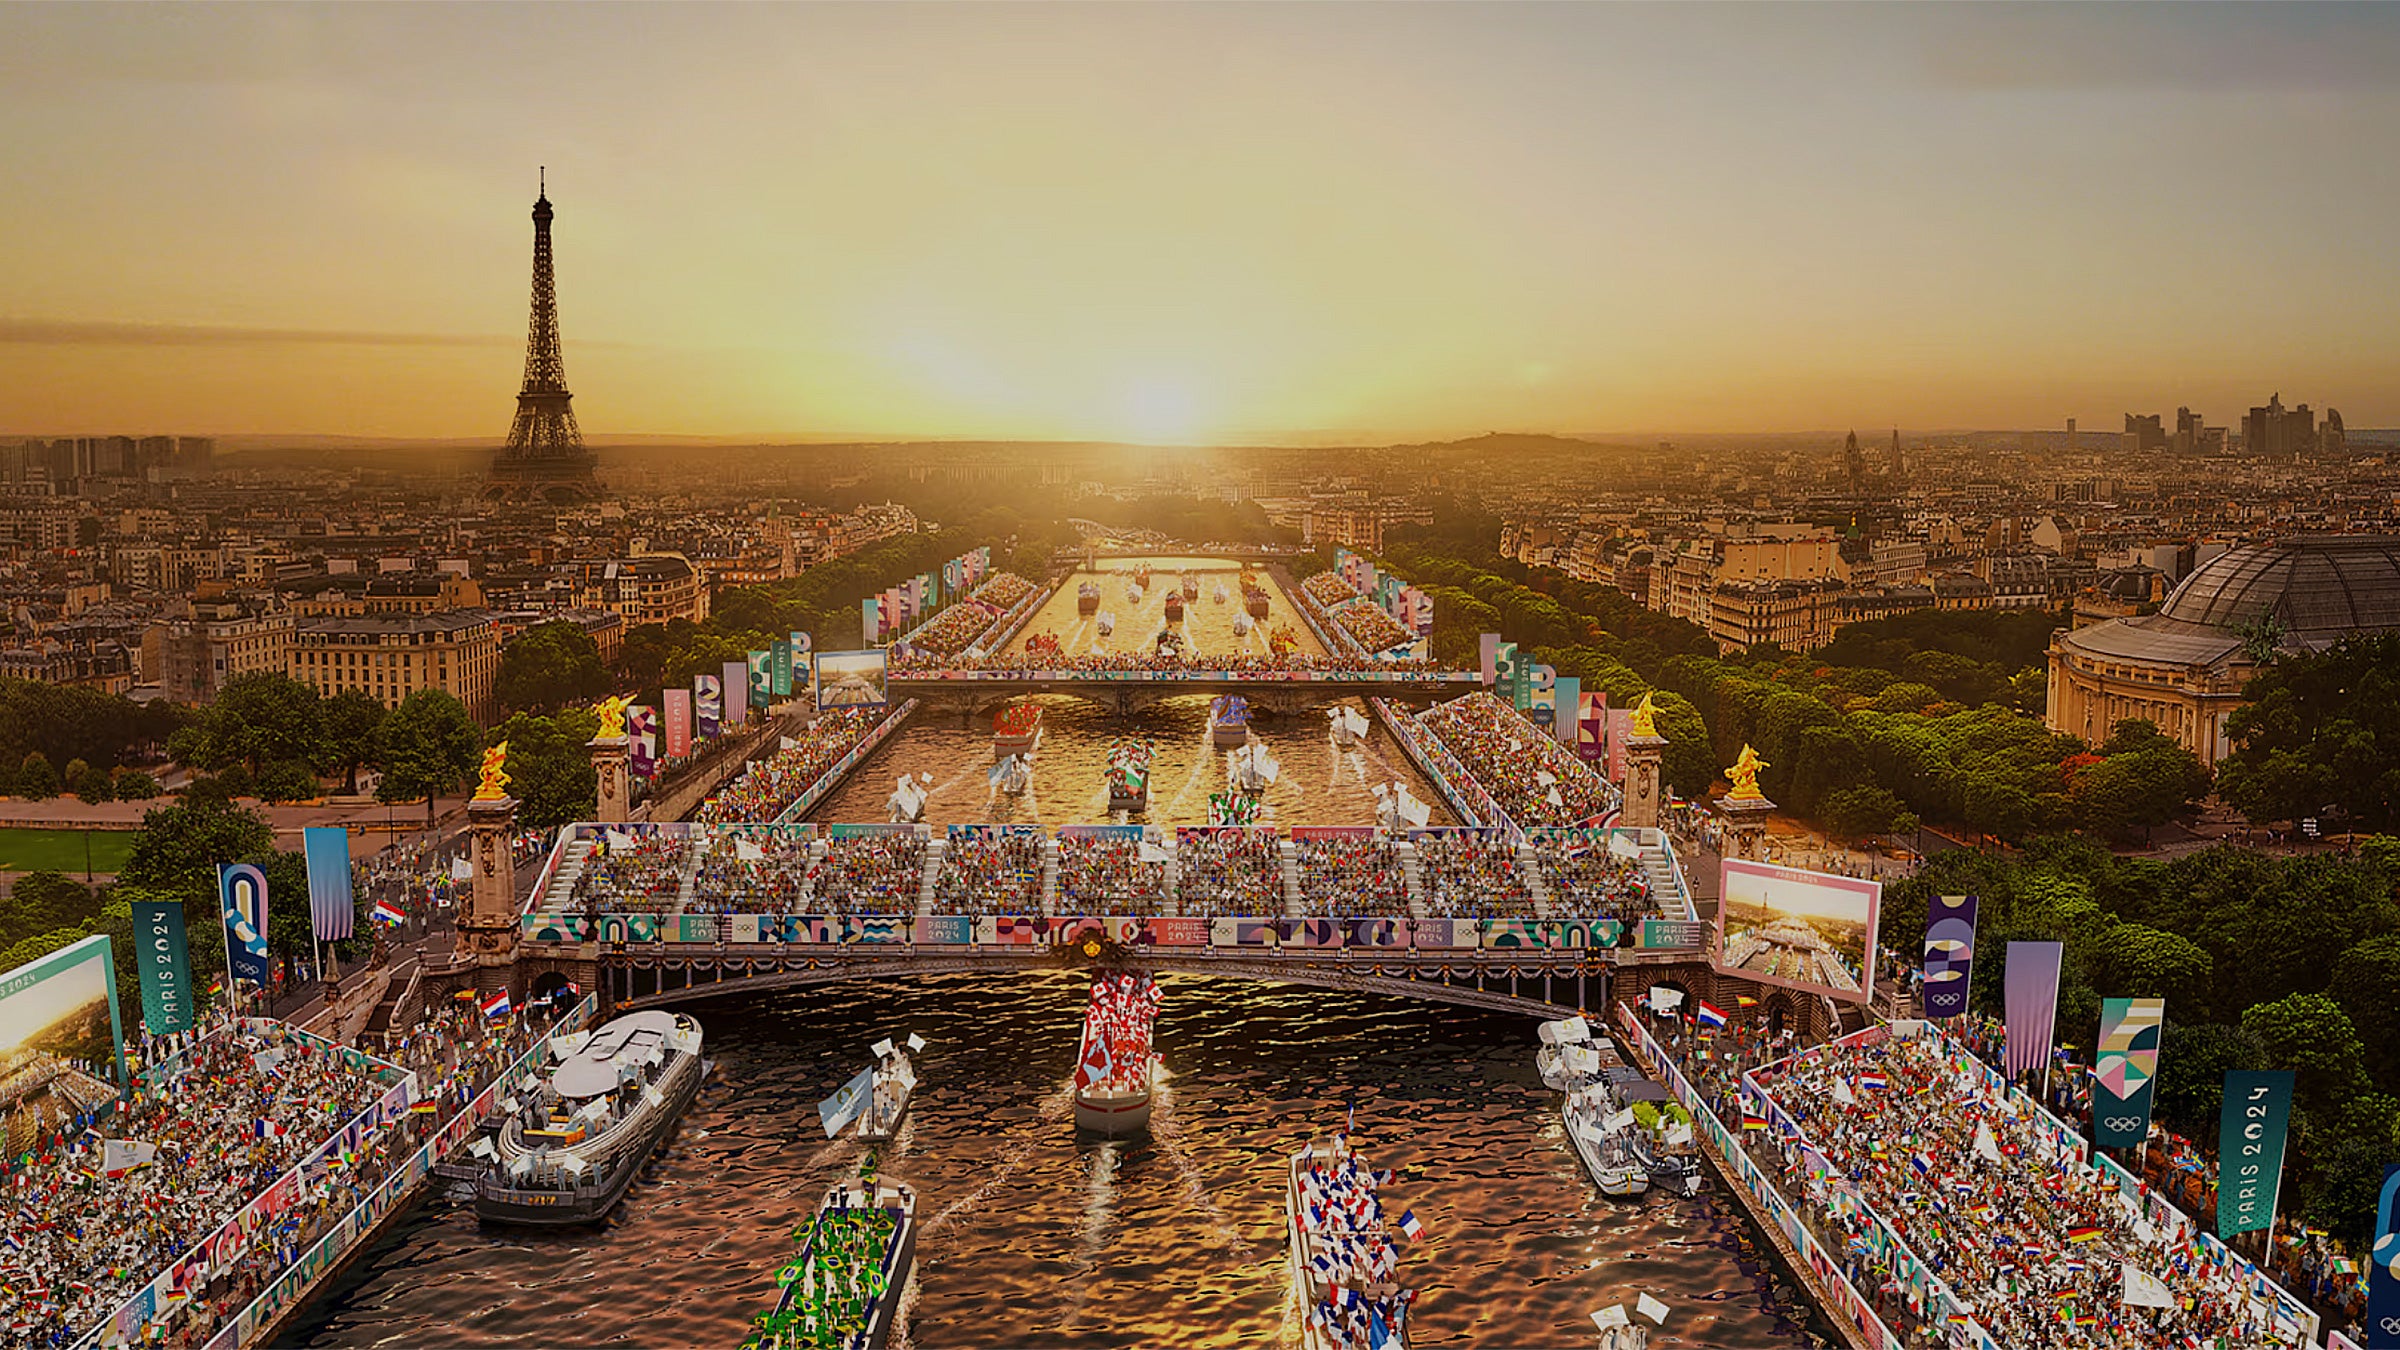 Paris 2024: Olympics opening ceremony rendering